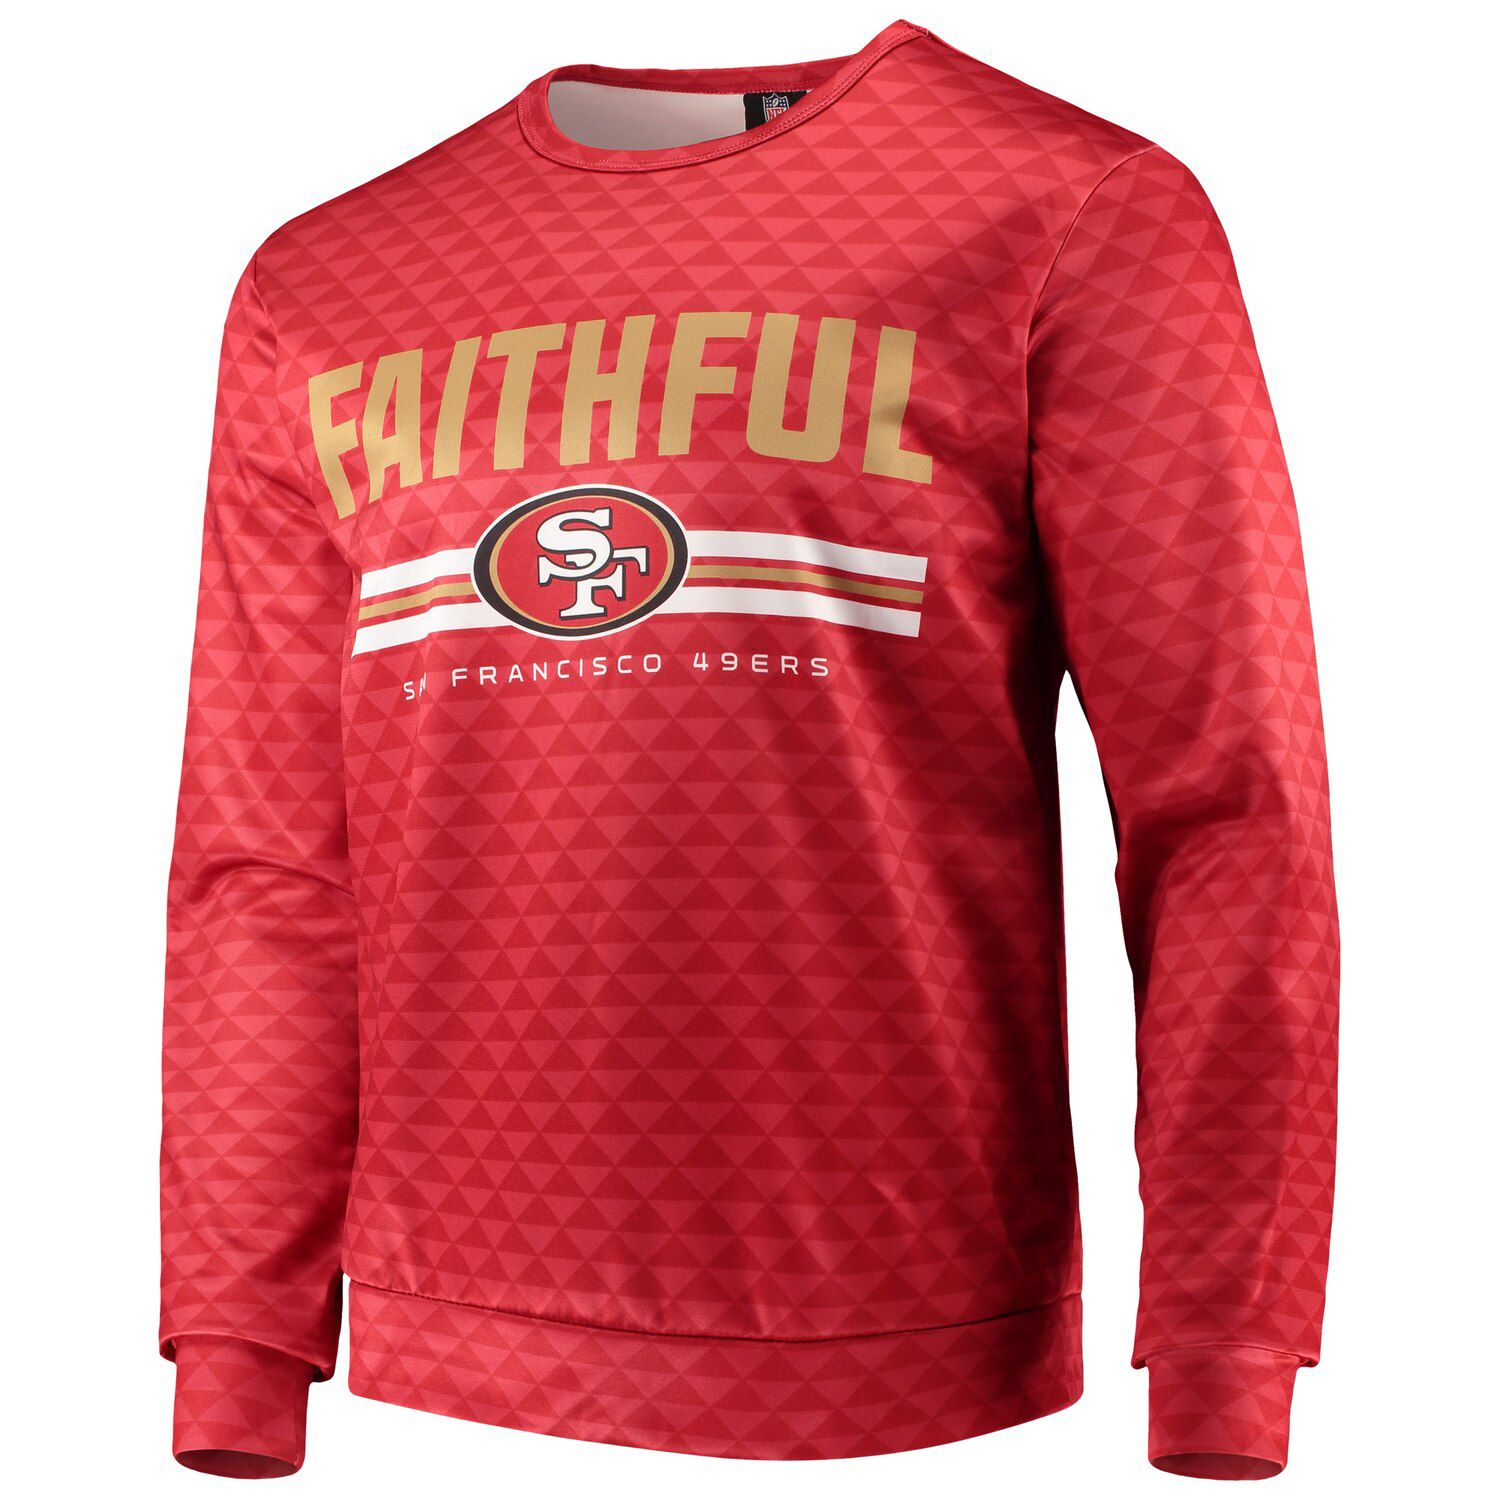 49ers jersey sweatshirt